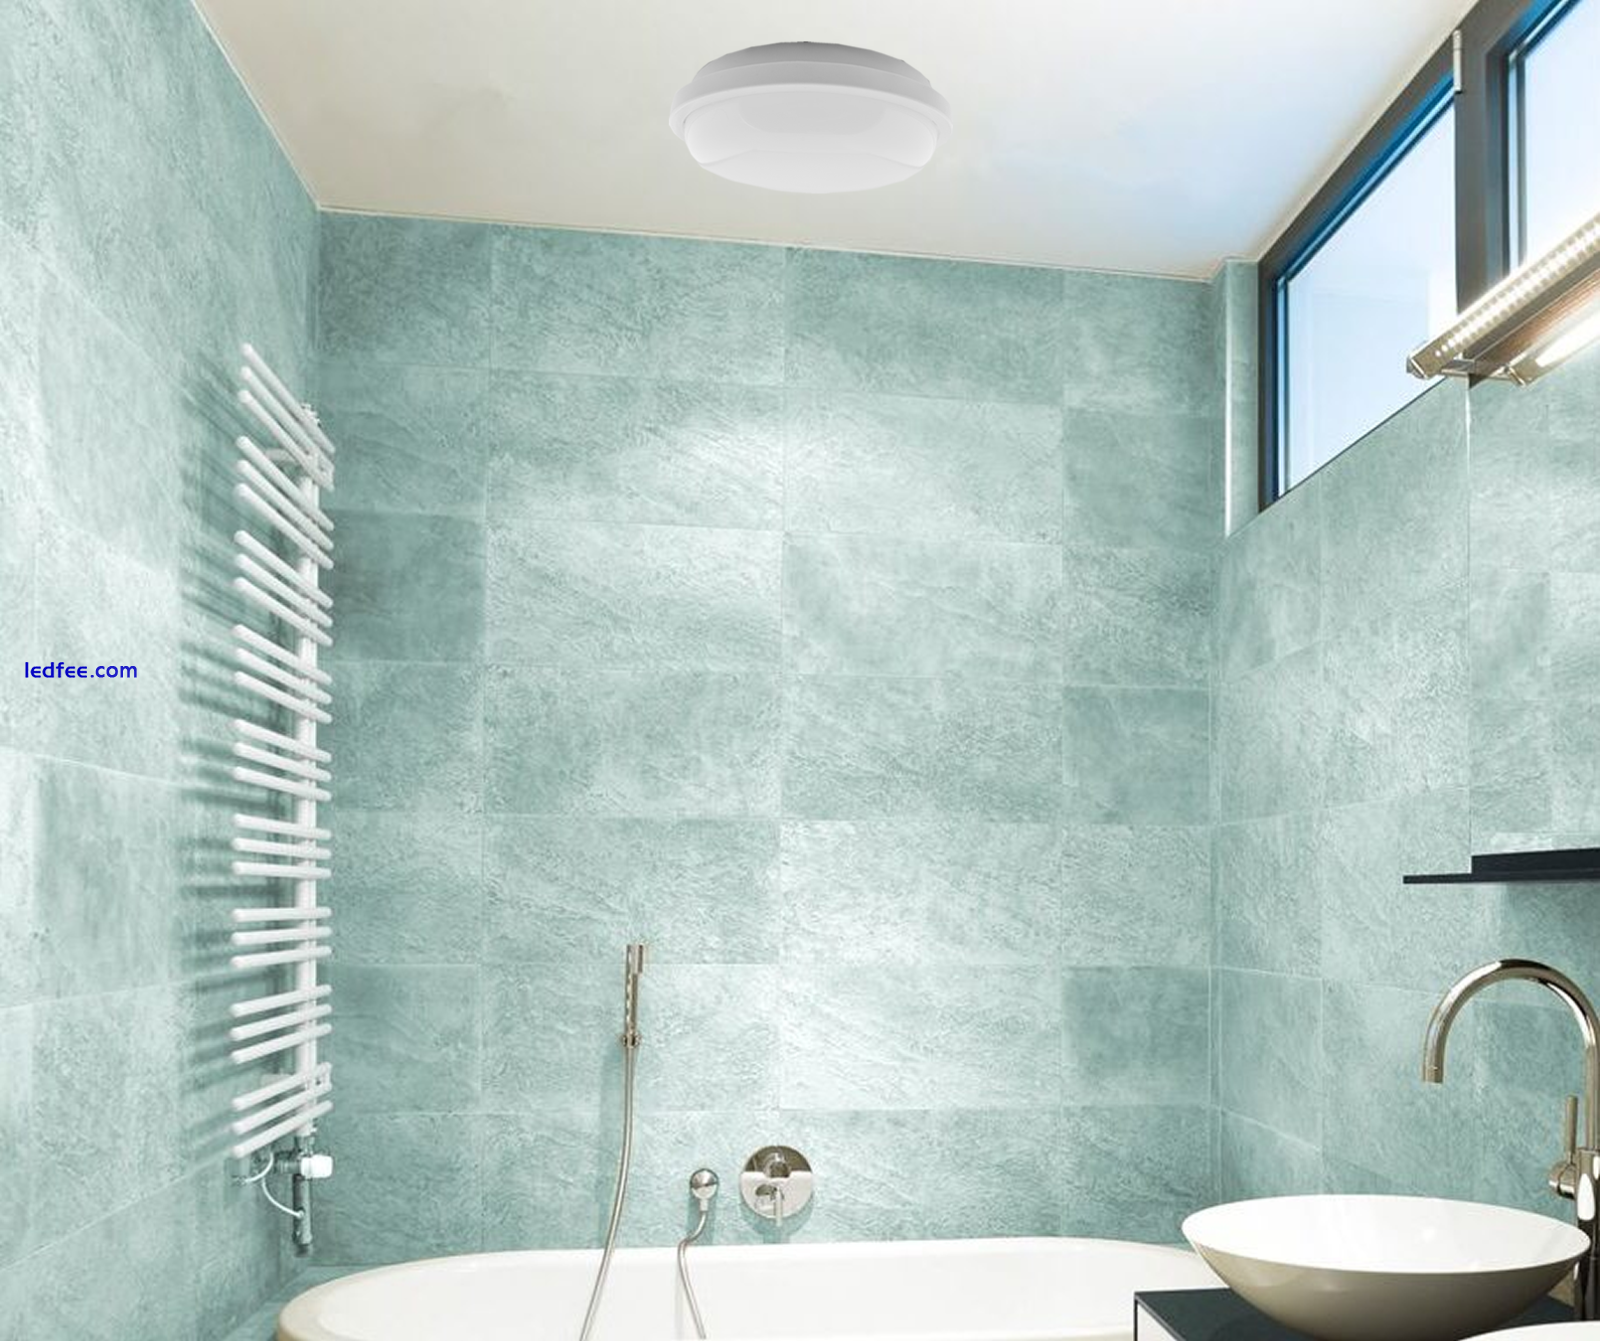 LED Ceiling Wall Light Bathrooms, Kitchen Outdoor Waterproof Bulkhead 20W White 5 